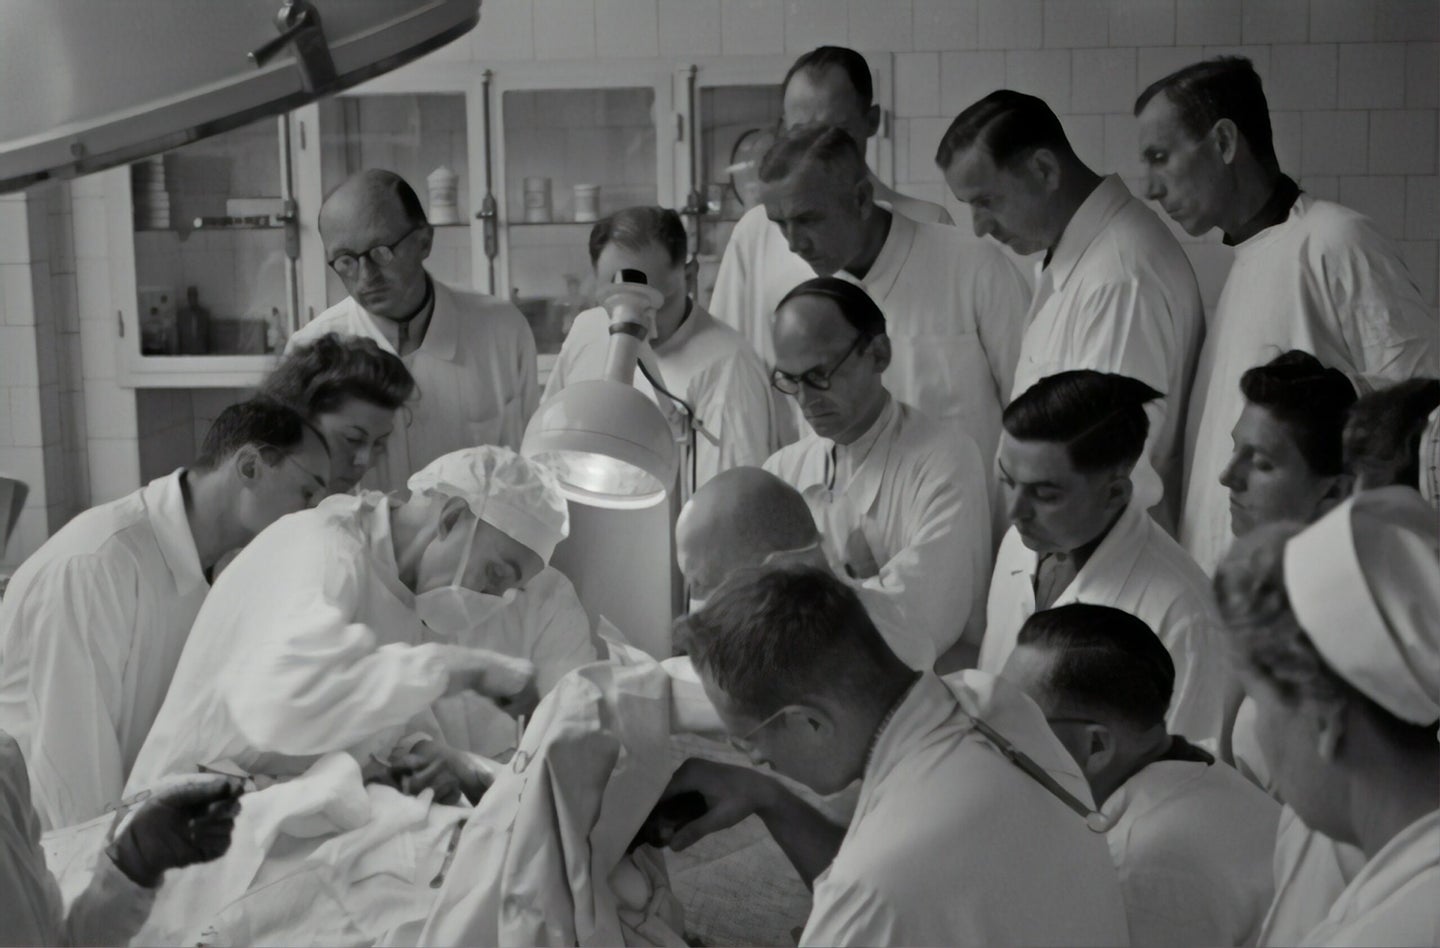 doctors gathered around patient in 1940s